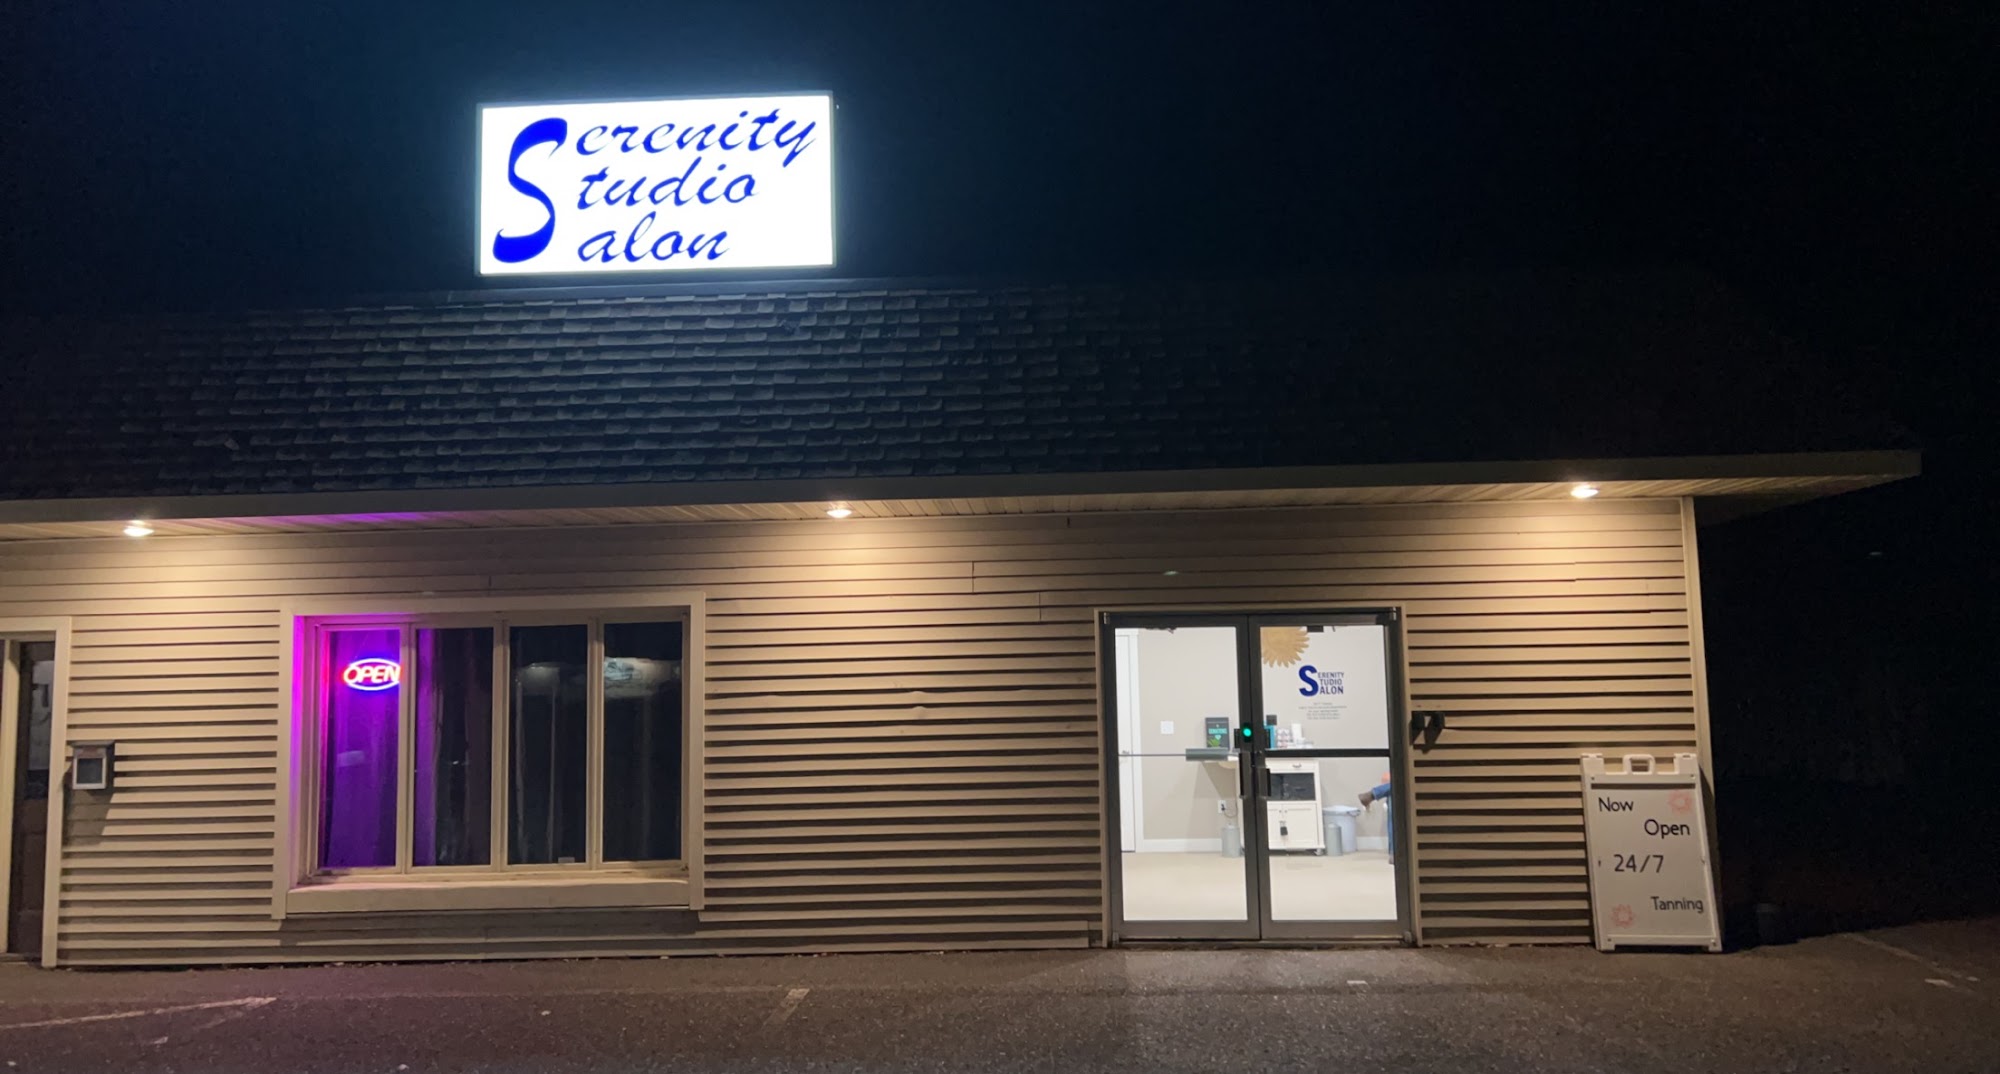 Serenity Studio Salon 210 2nd St, Chetek Wisconsin 54728